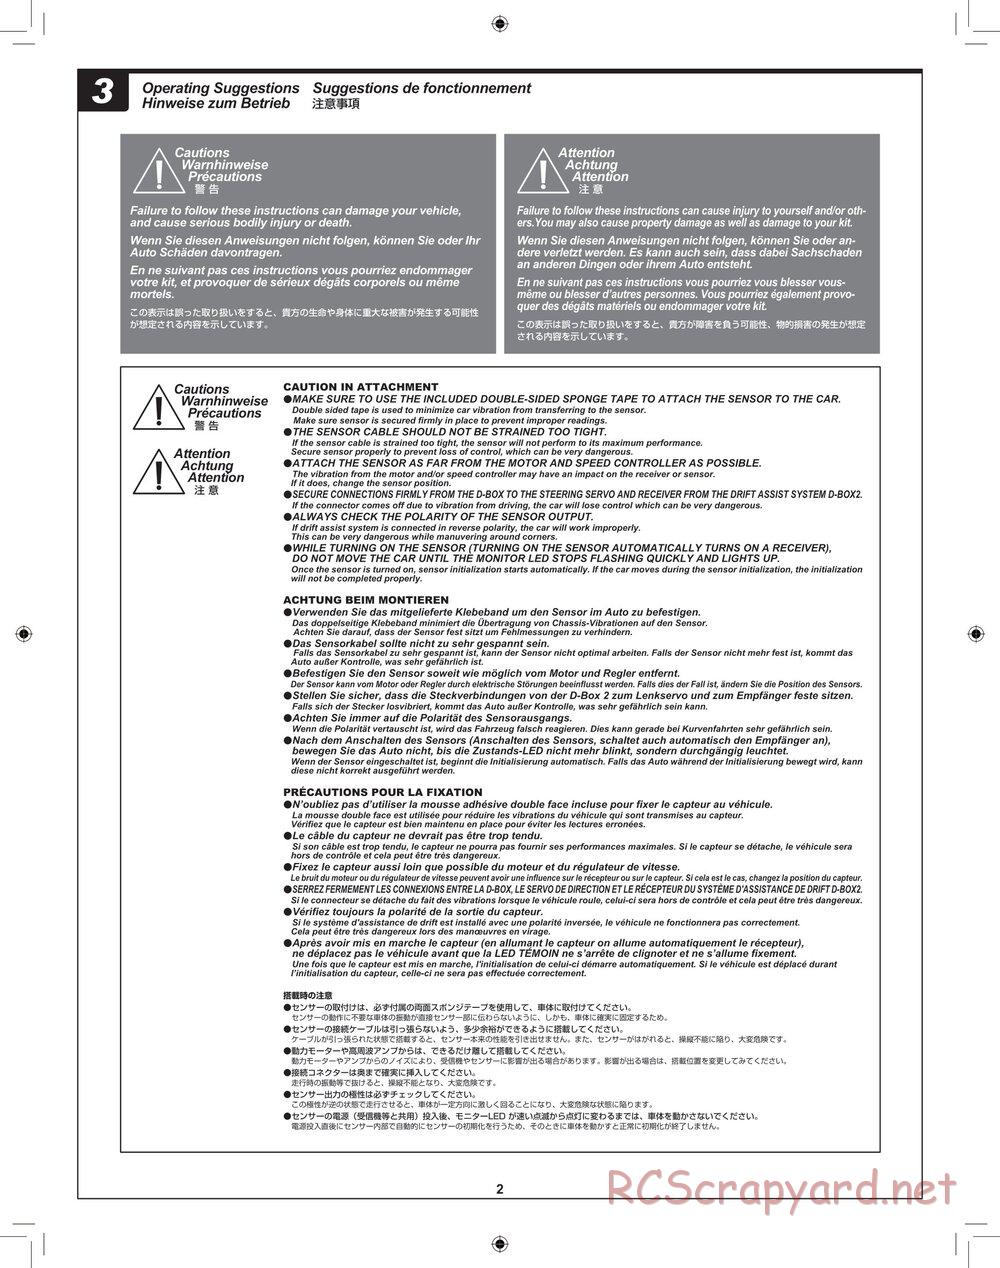 HPI - Baja 5B 2.0 D-Box2 - Manual - Page 2